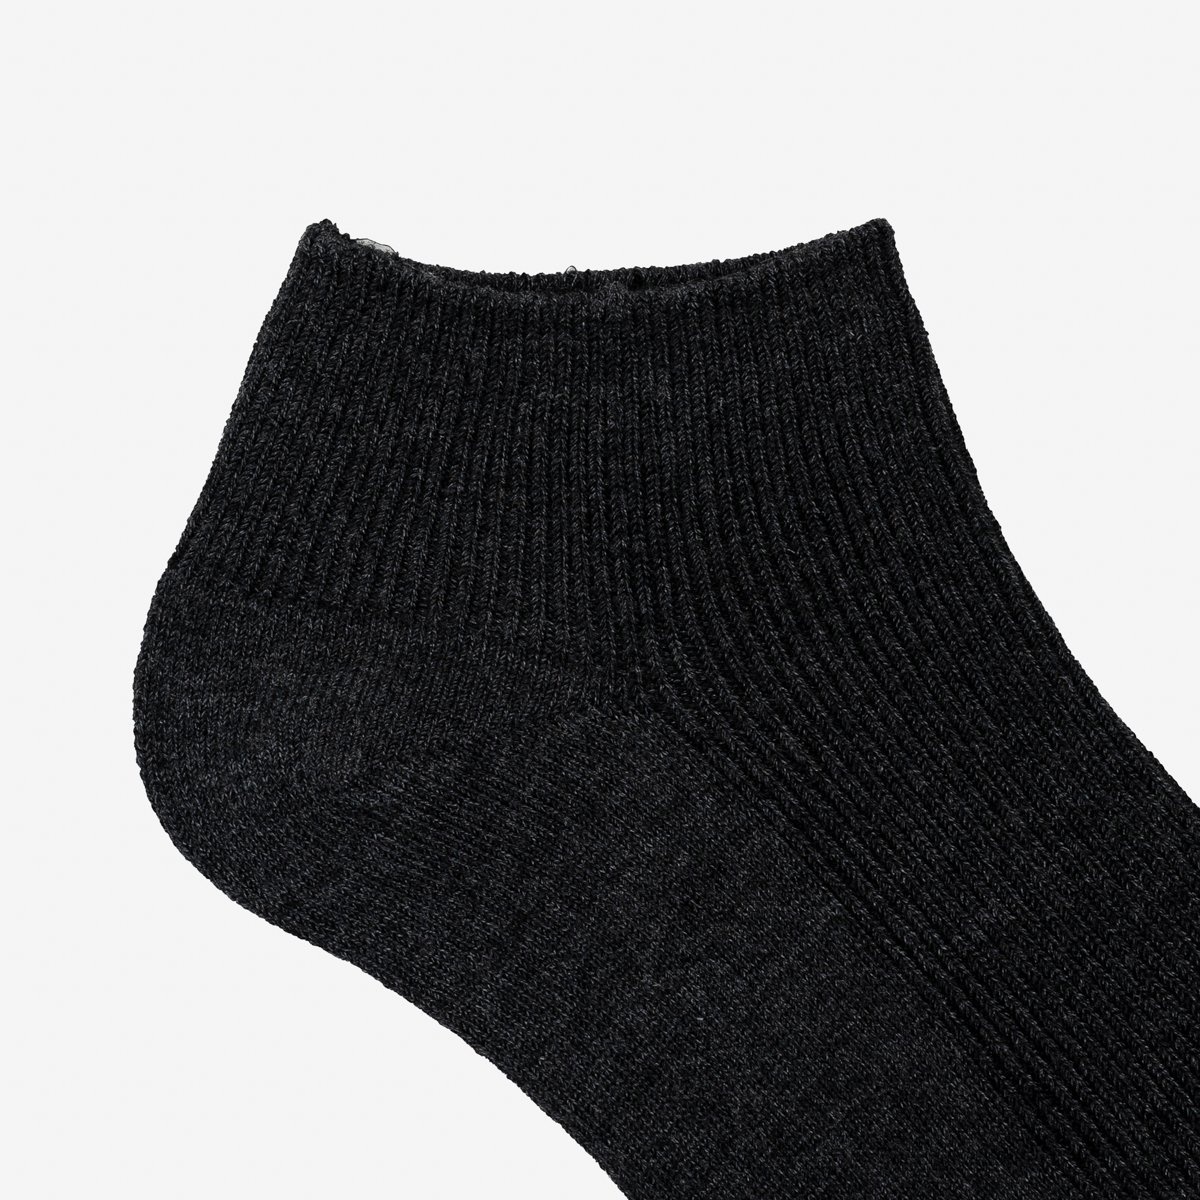 UTSS-CGR UTILITEES Mixed Cotton Sneaker Socks - Charcoal Grey - 3